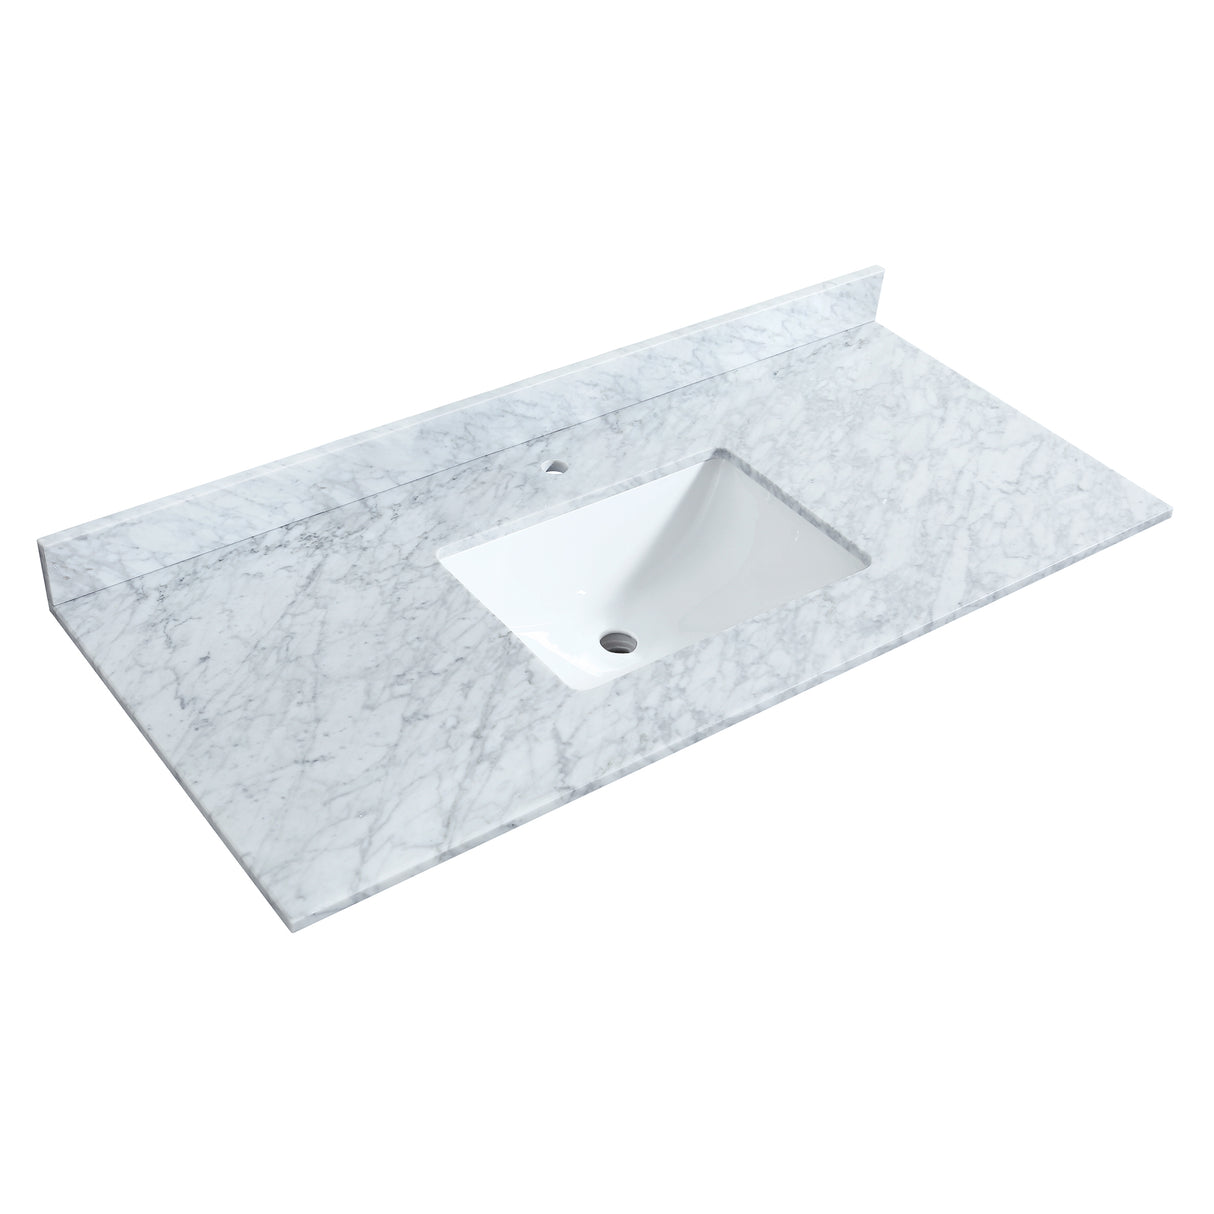 Strada 48 Inch Single Bathroom Vanity in Dark Gray White Carrara Marble Countertop Undermount Square Sink Matte Black Trim